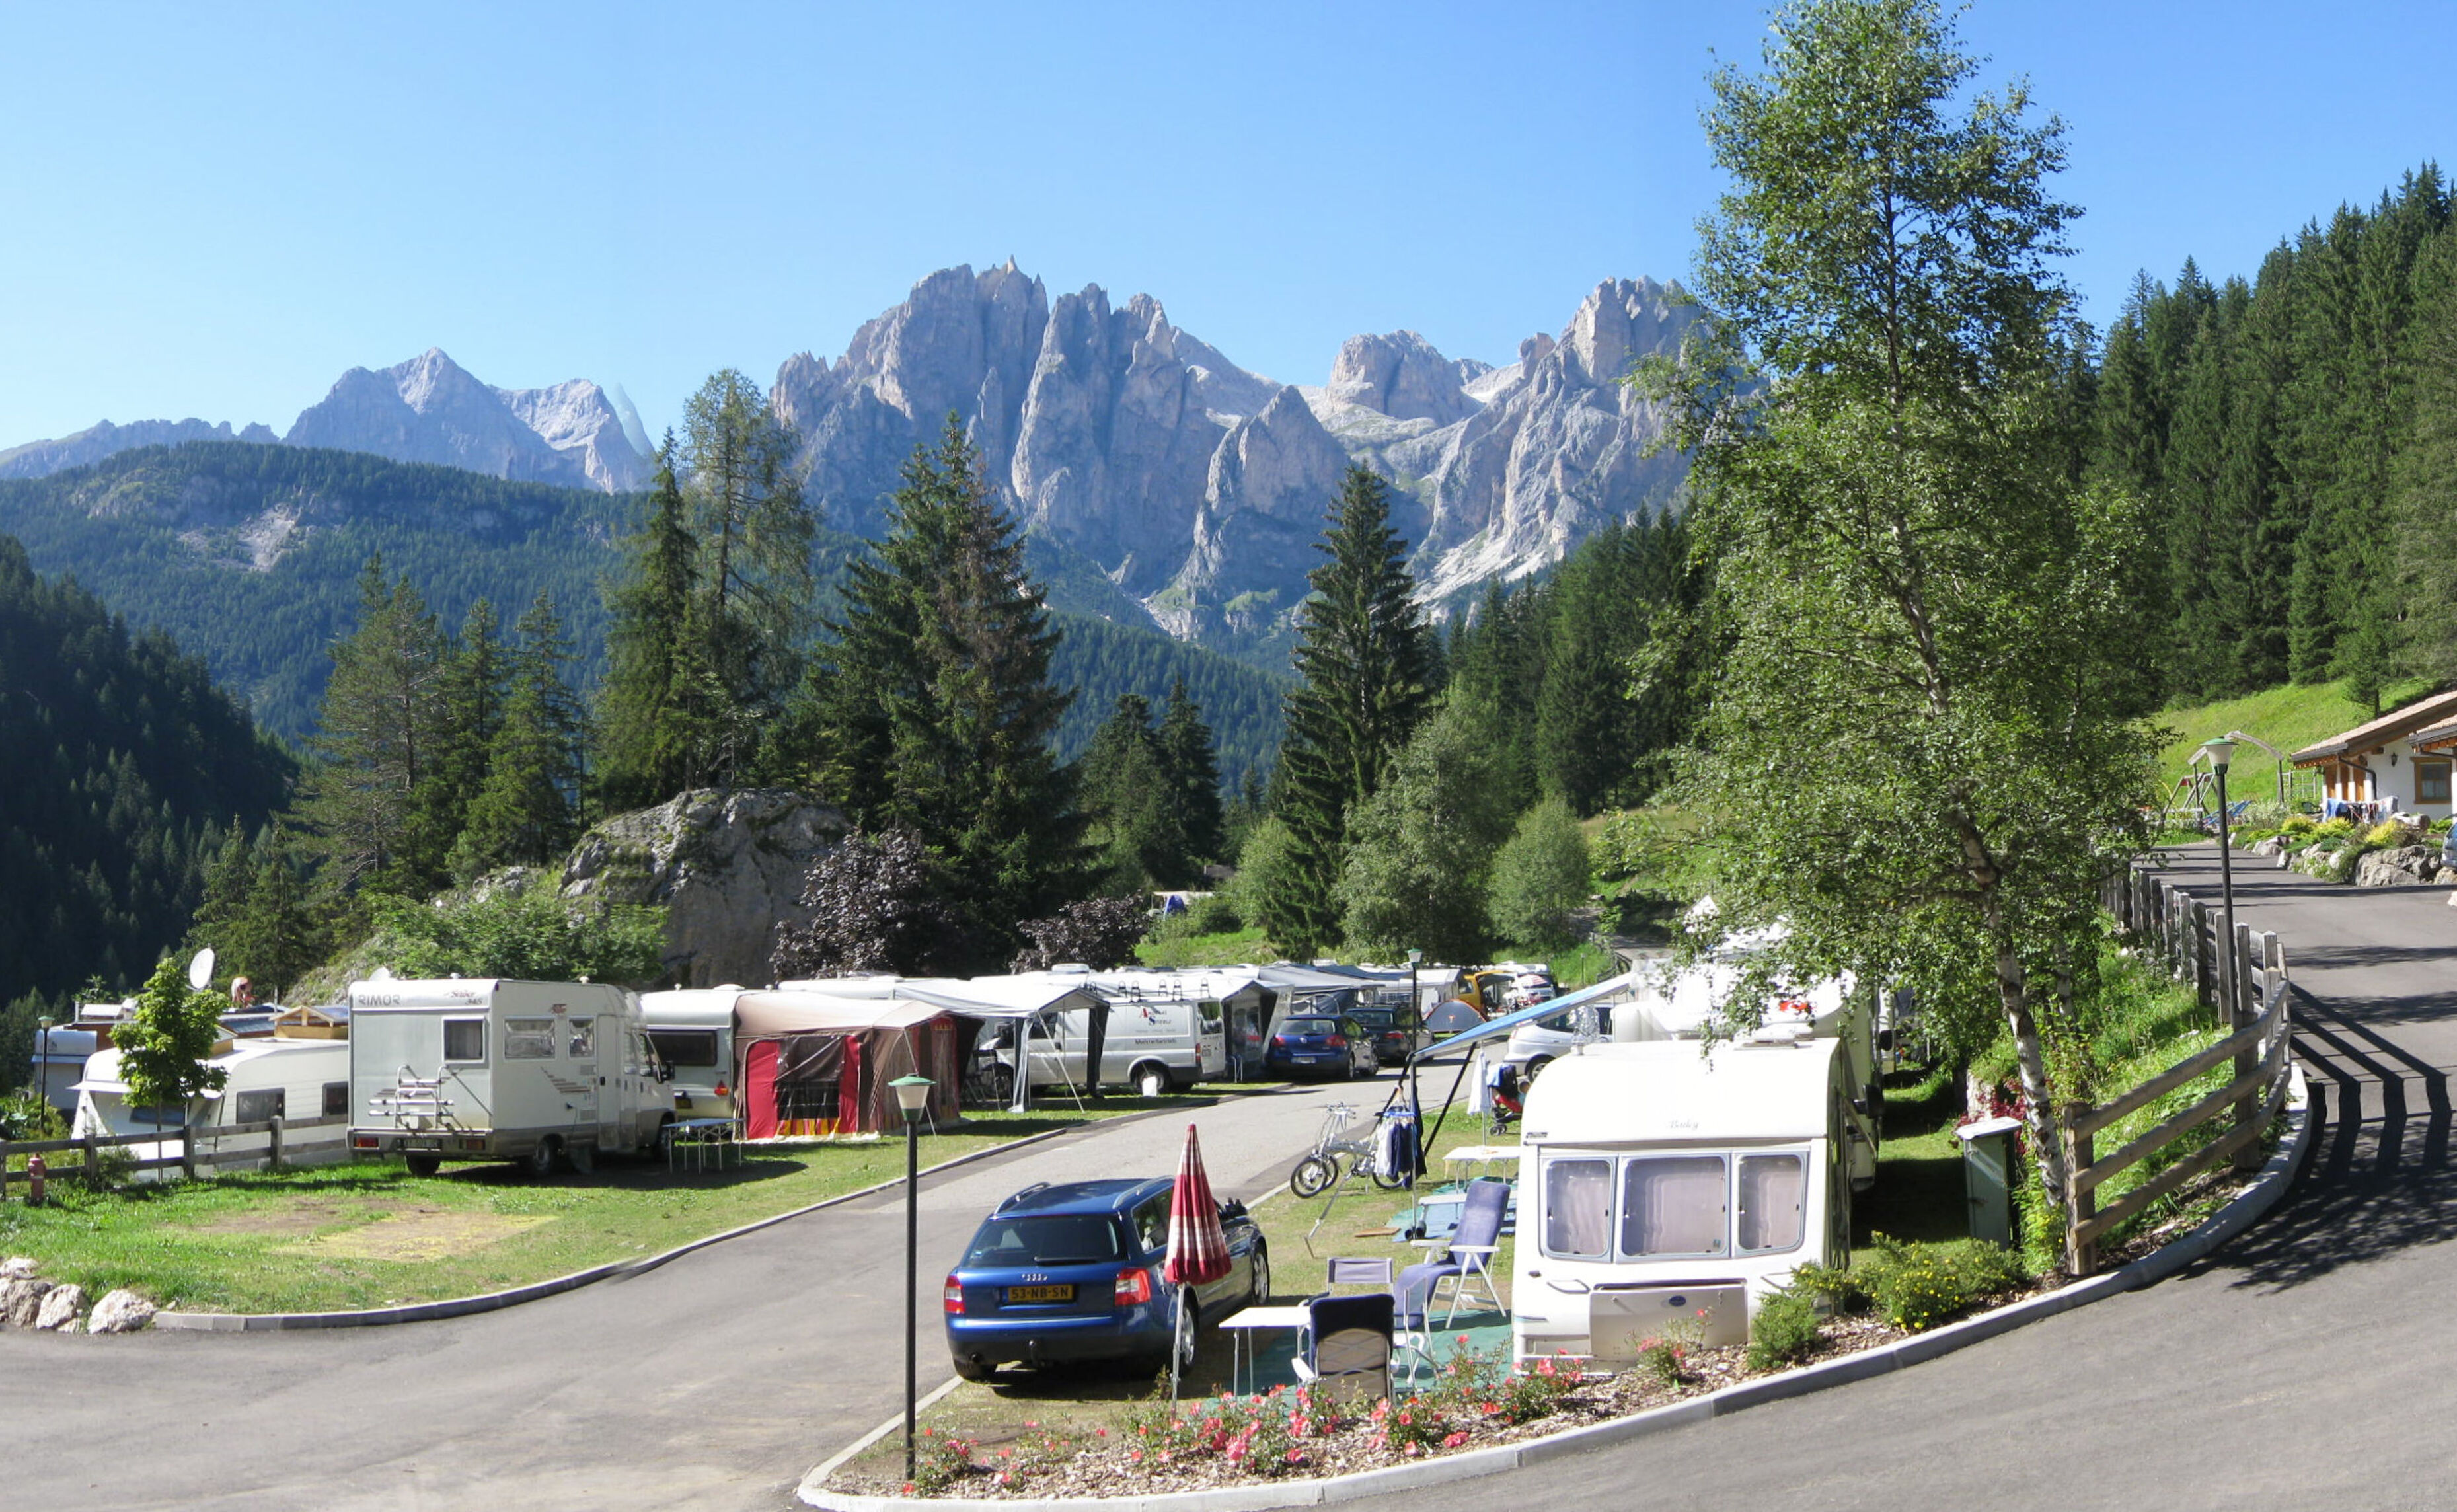 Camping Vidor Family & Wellness Resort